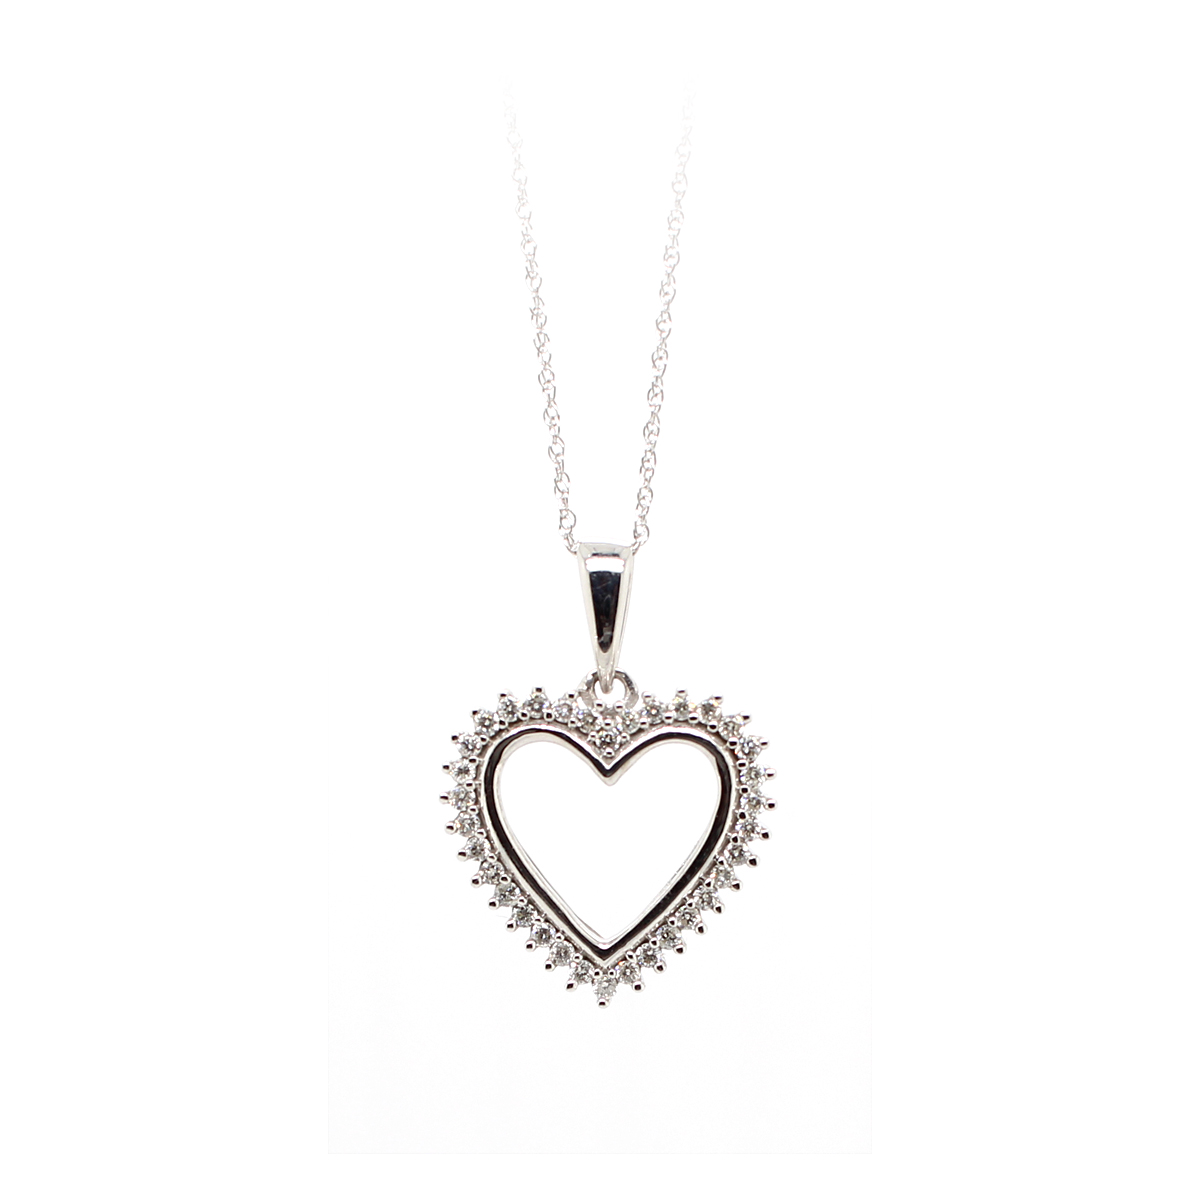 10 Karat White Gold Diamond Heart Necklace